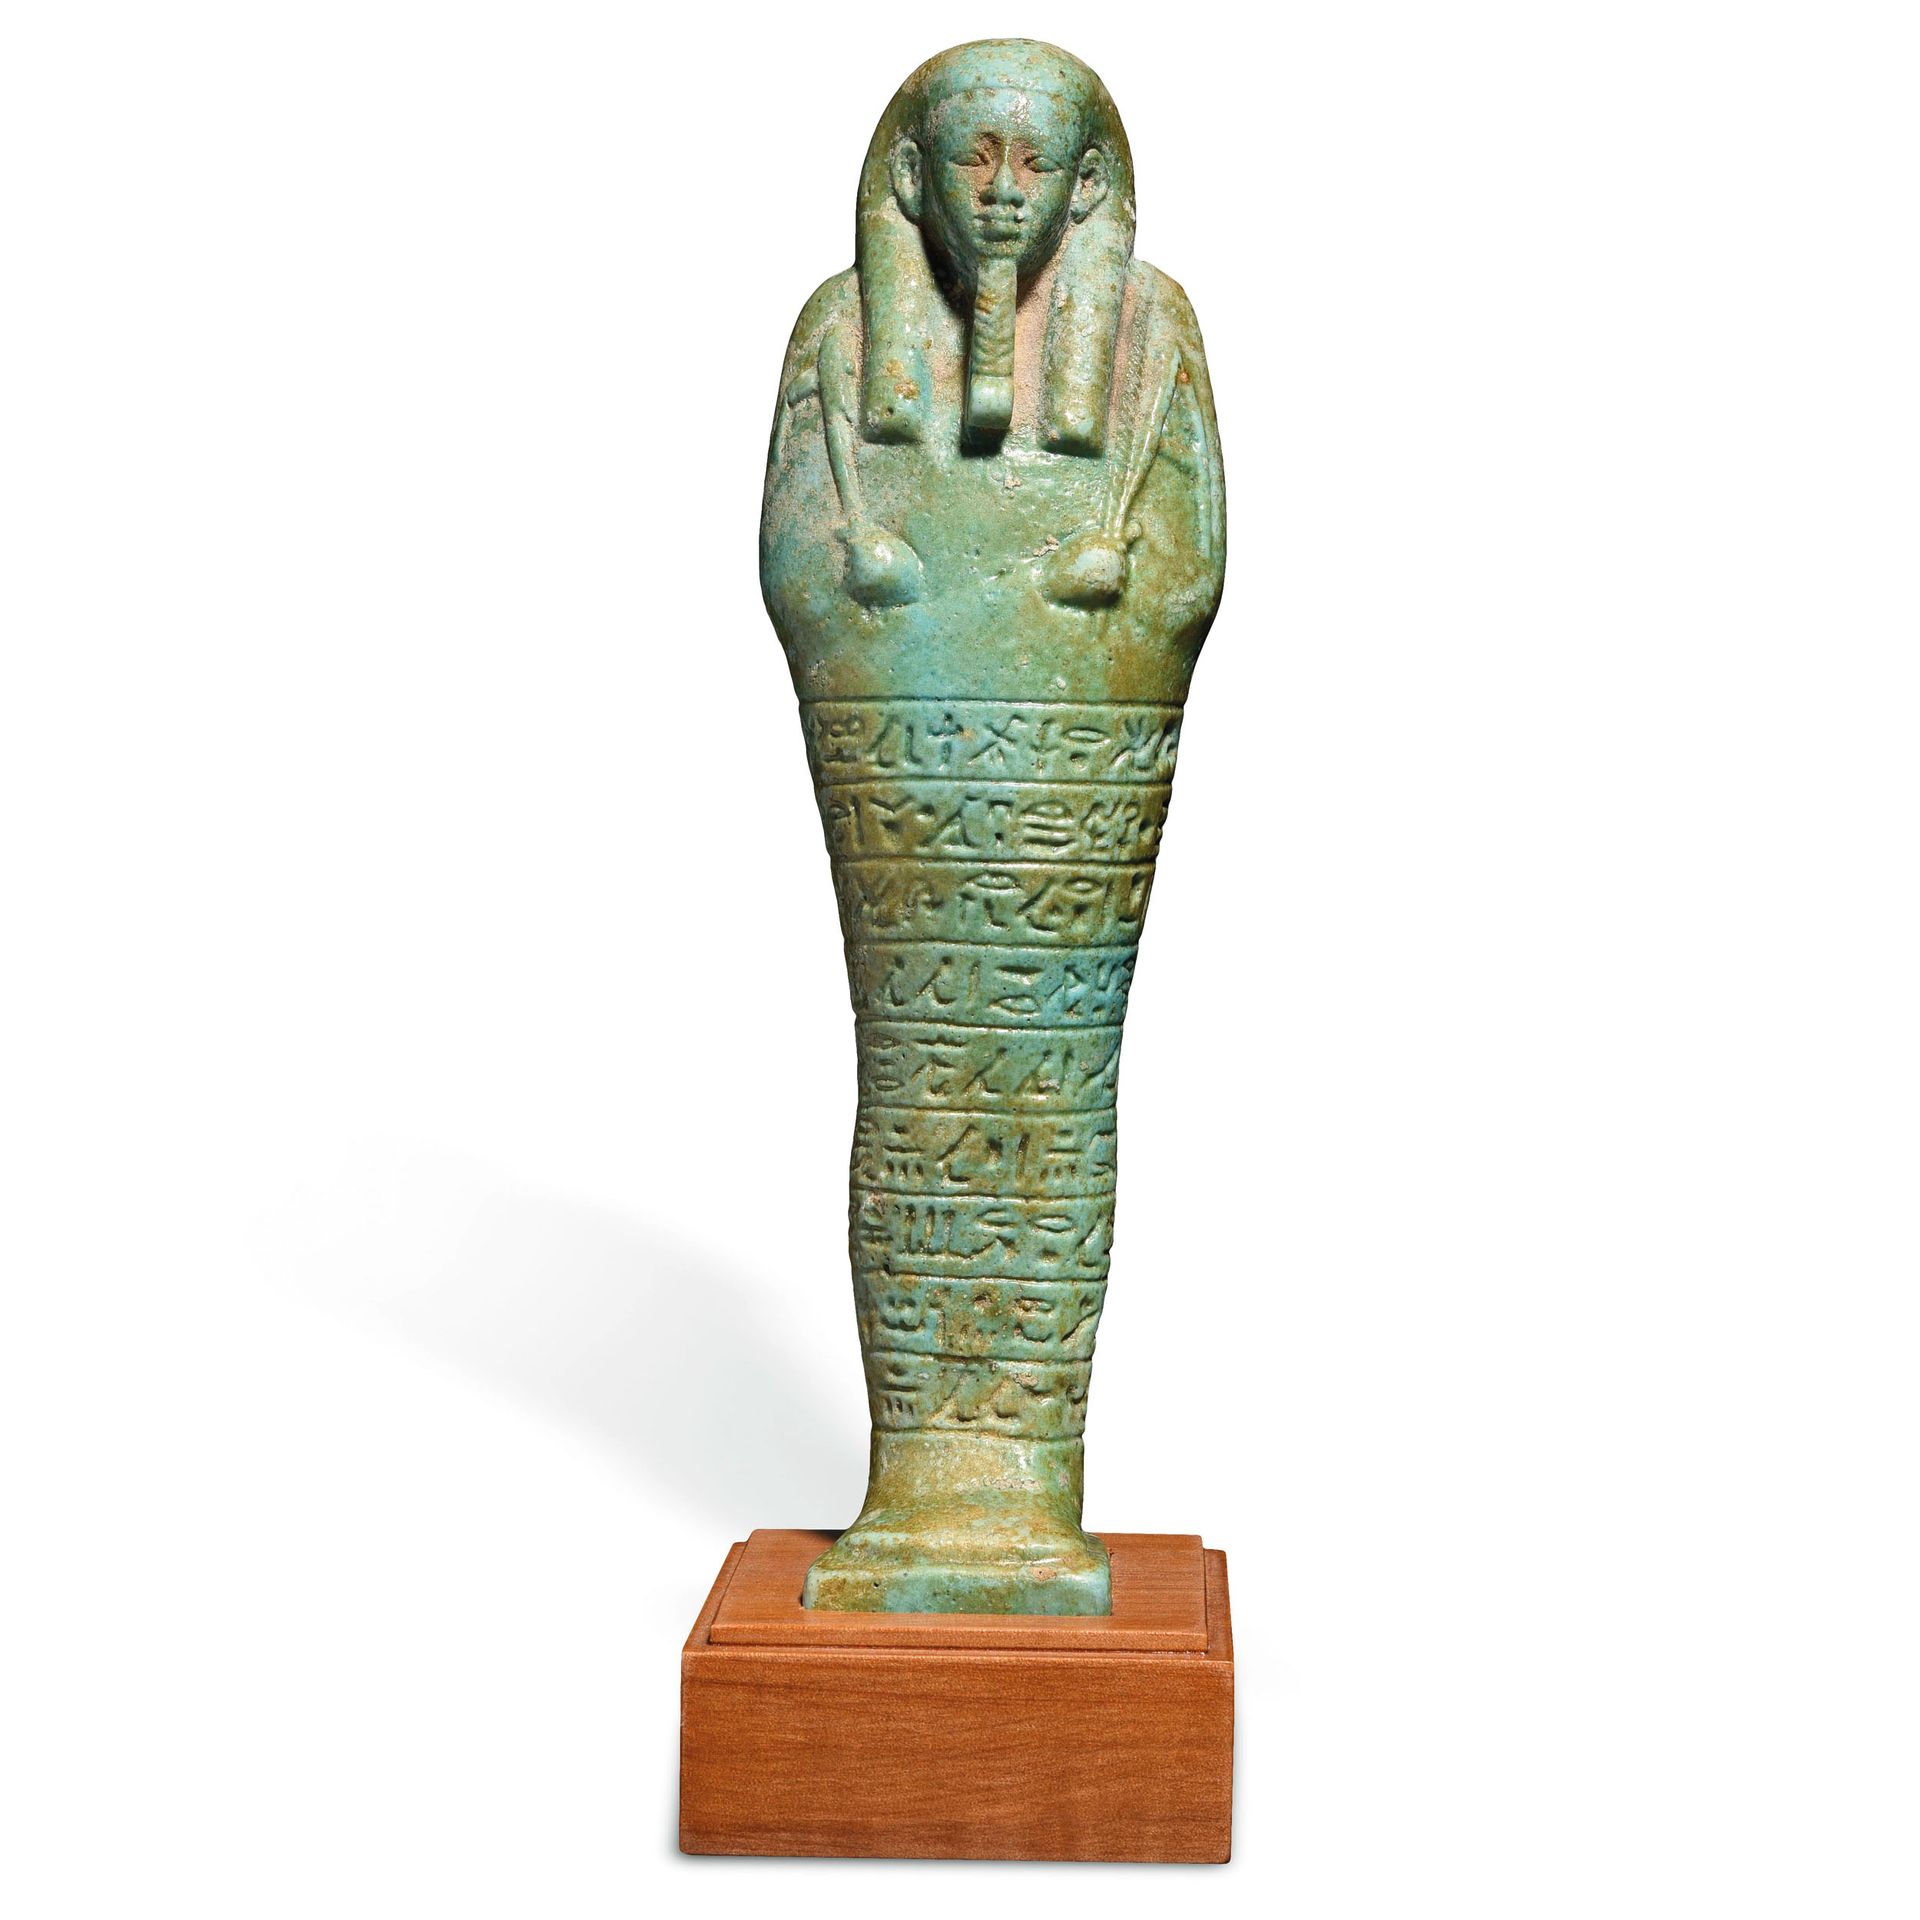 Null OUSHABTI NEL NOME DI PSAMETIK

Egitto, dinastia 26, 664-525 a.C. 

Terracot&hellip;